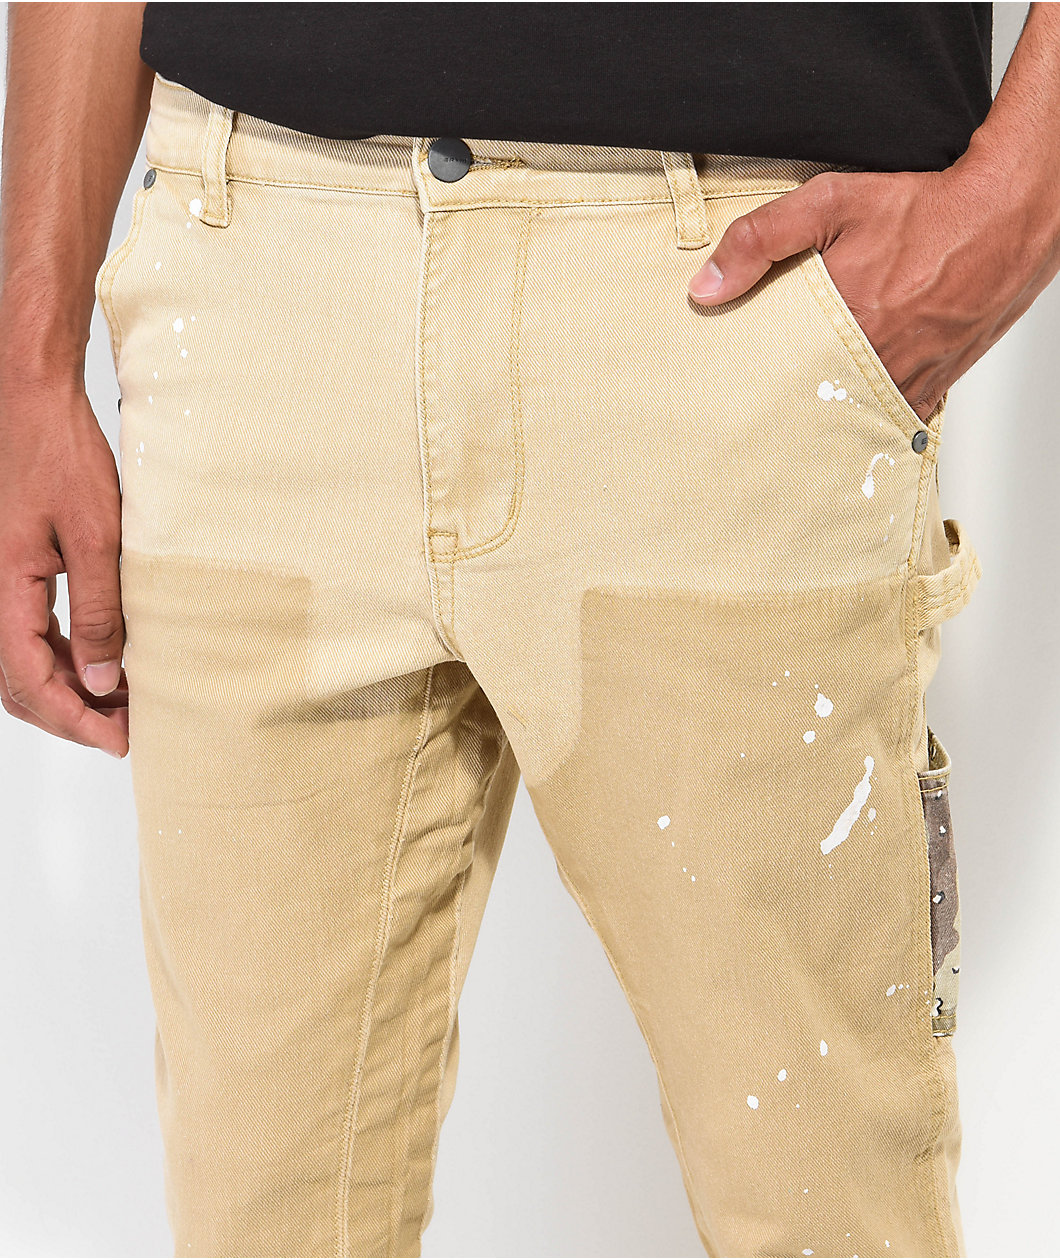 Latest Clearance EPTM Camo Pocket Khaki Flare Pants States